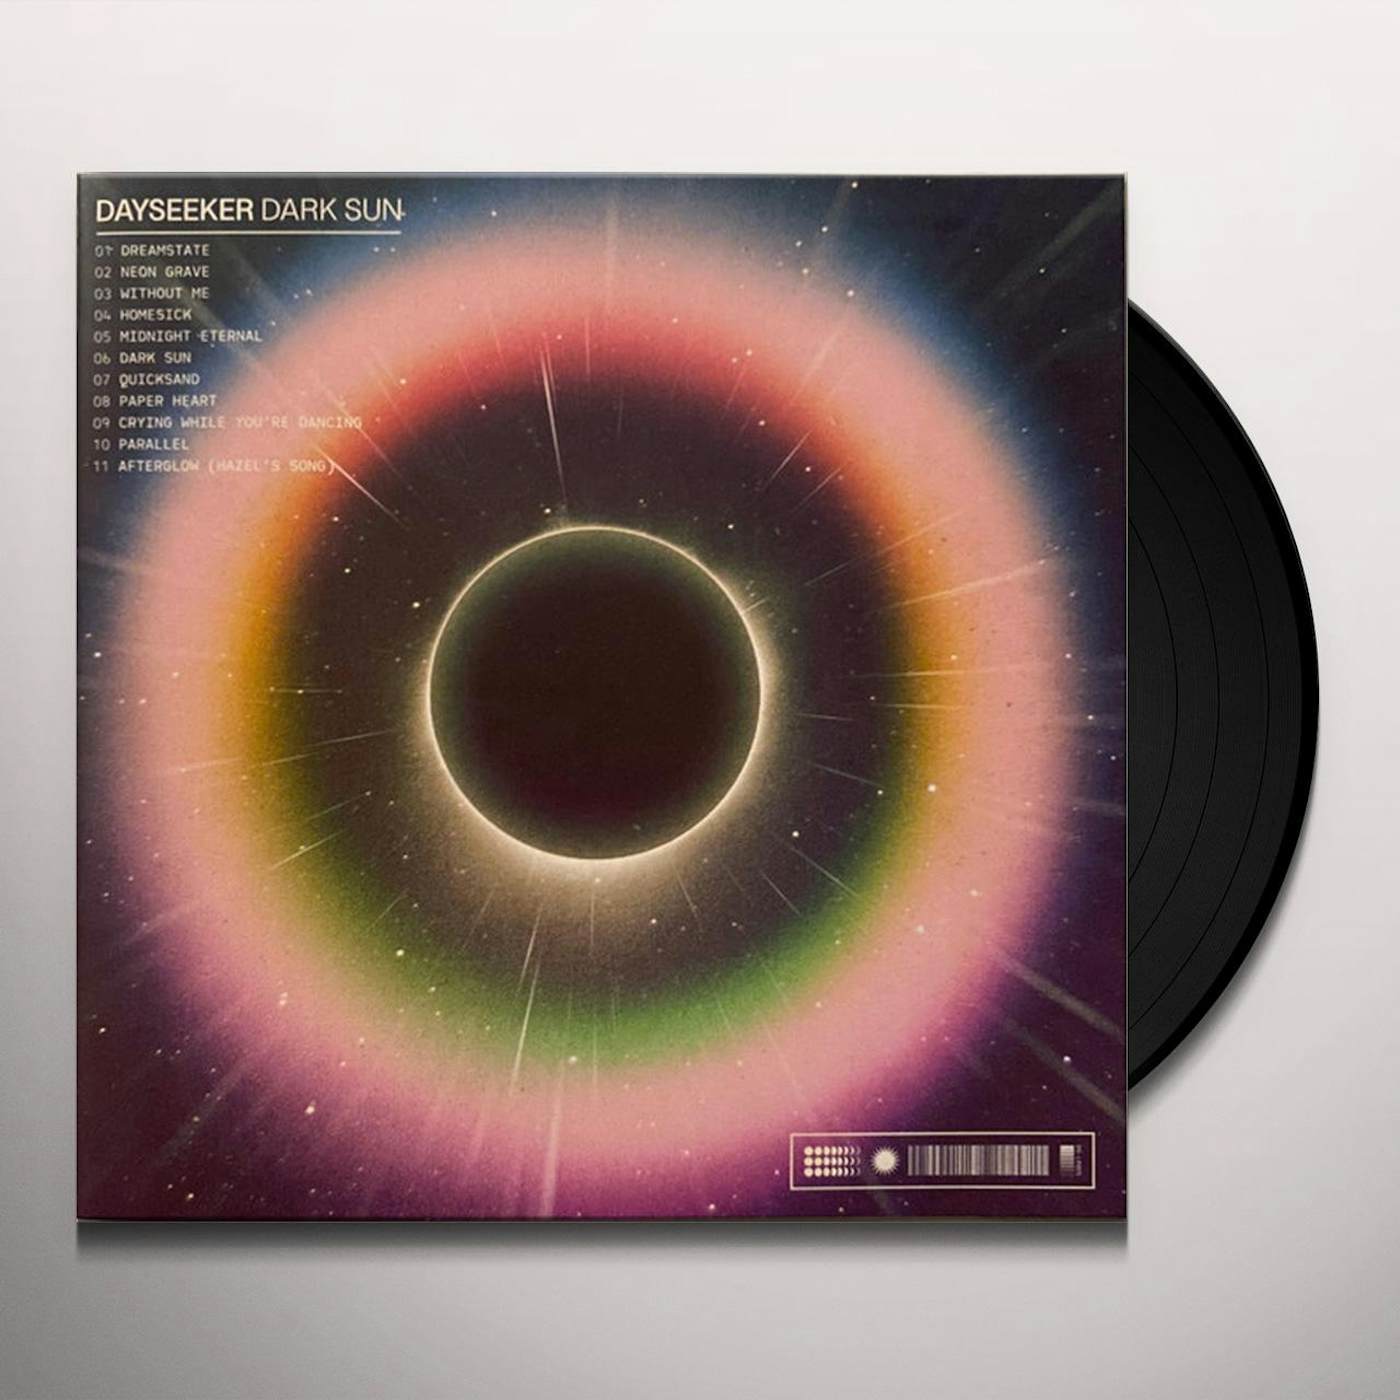  Dark Sun: CDs & Vinyl